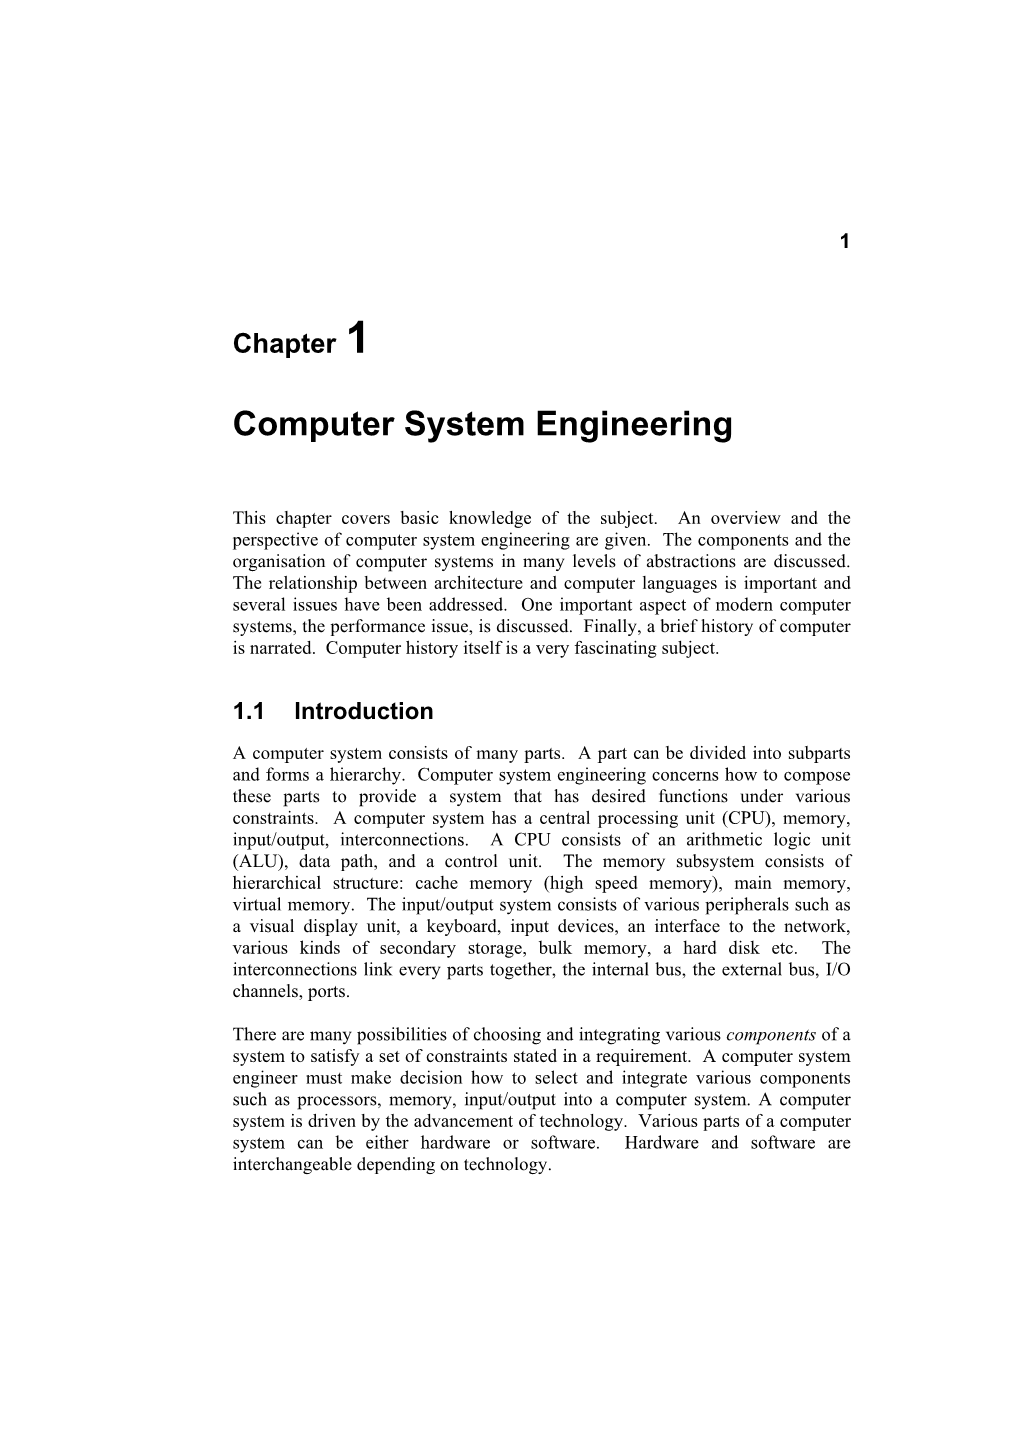 Computer System Engineering